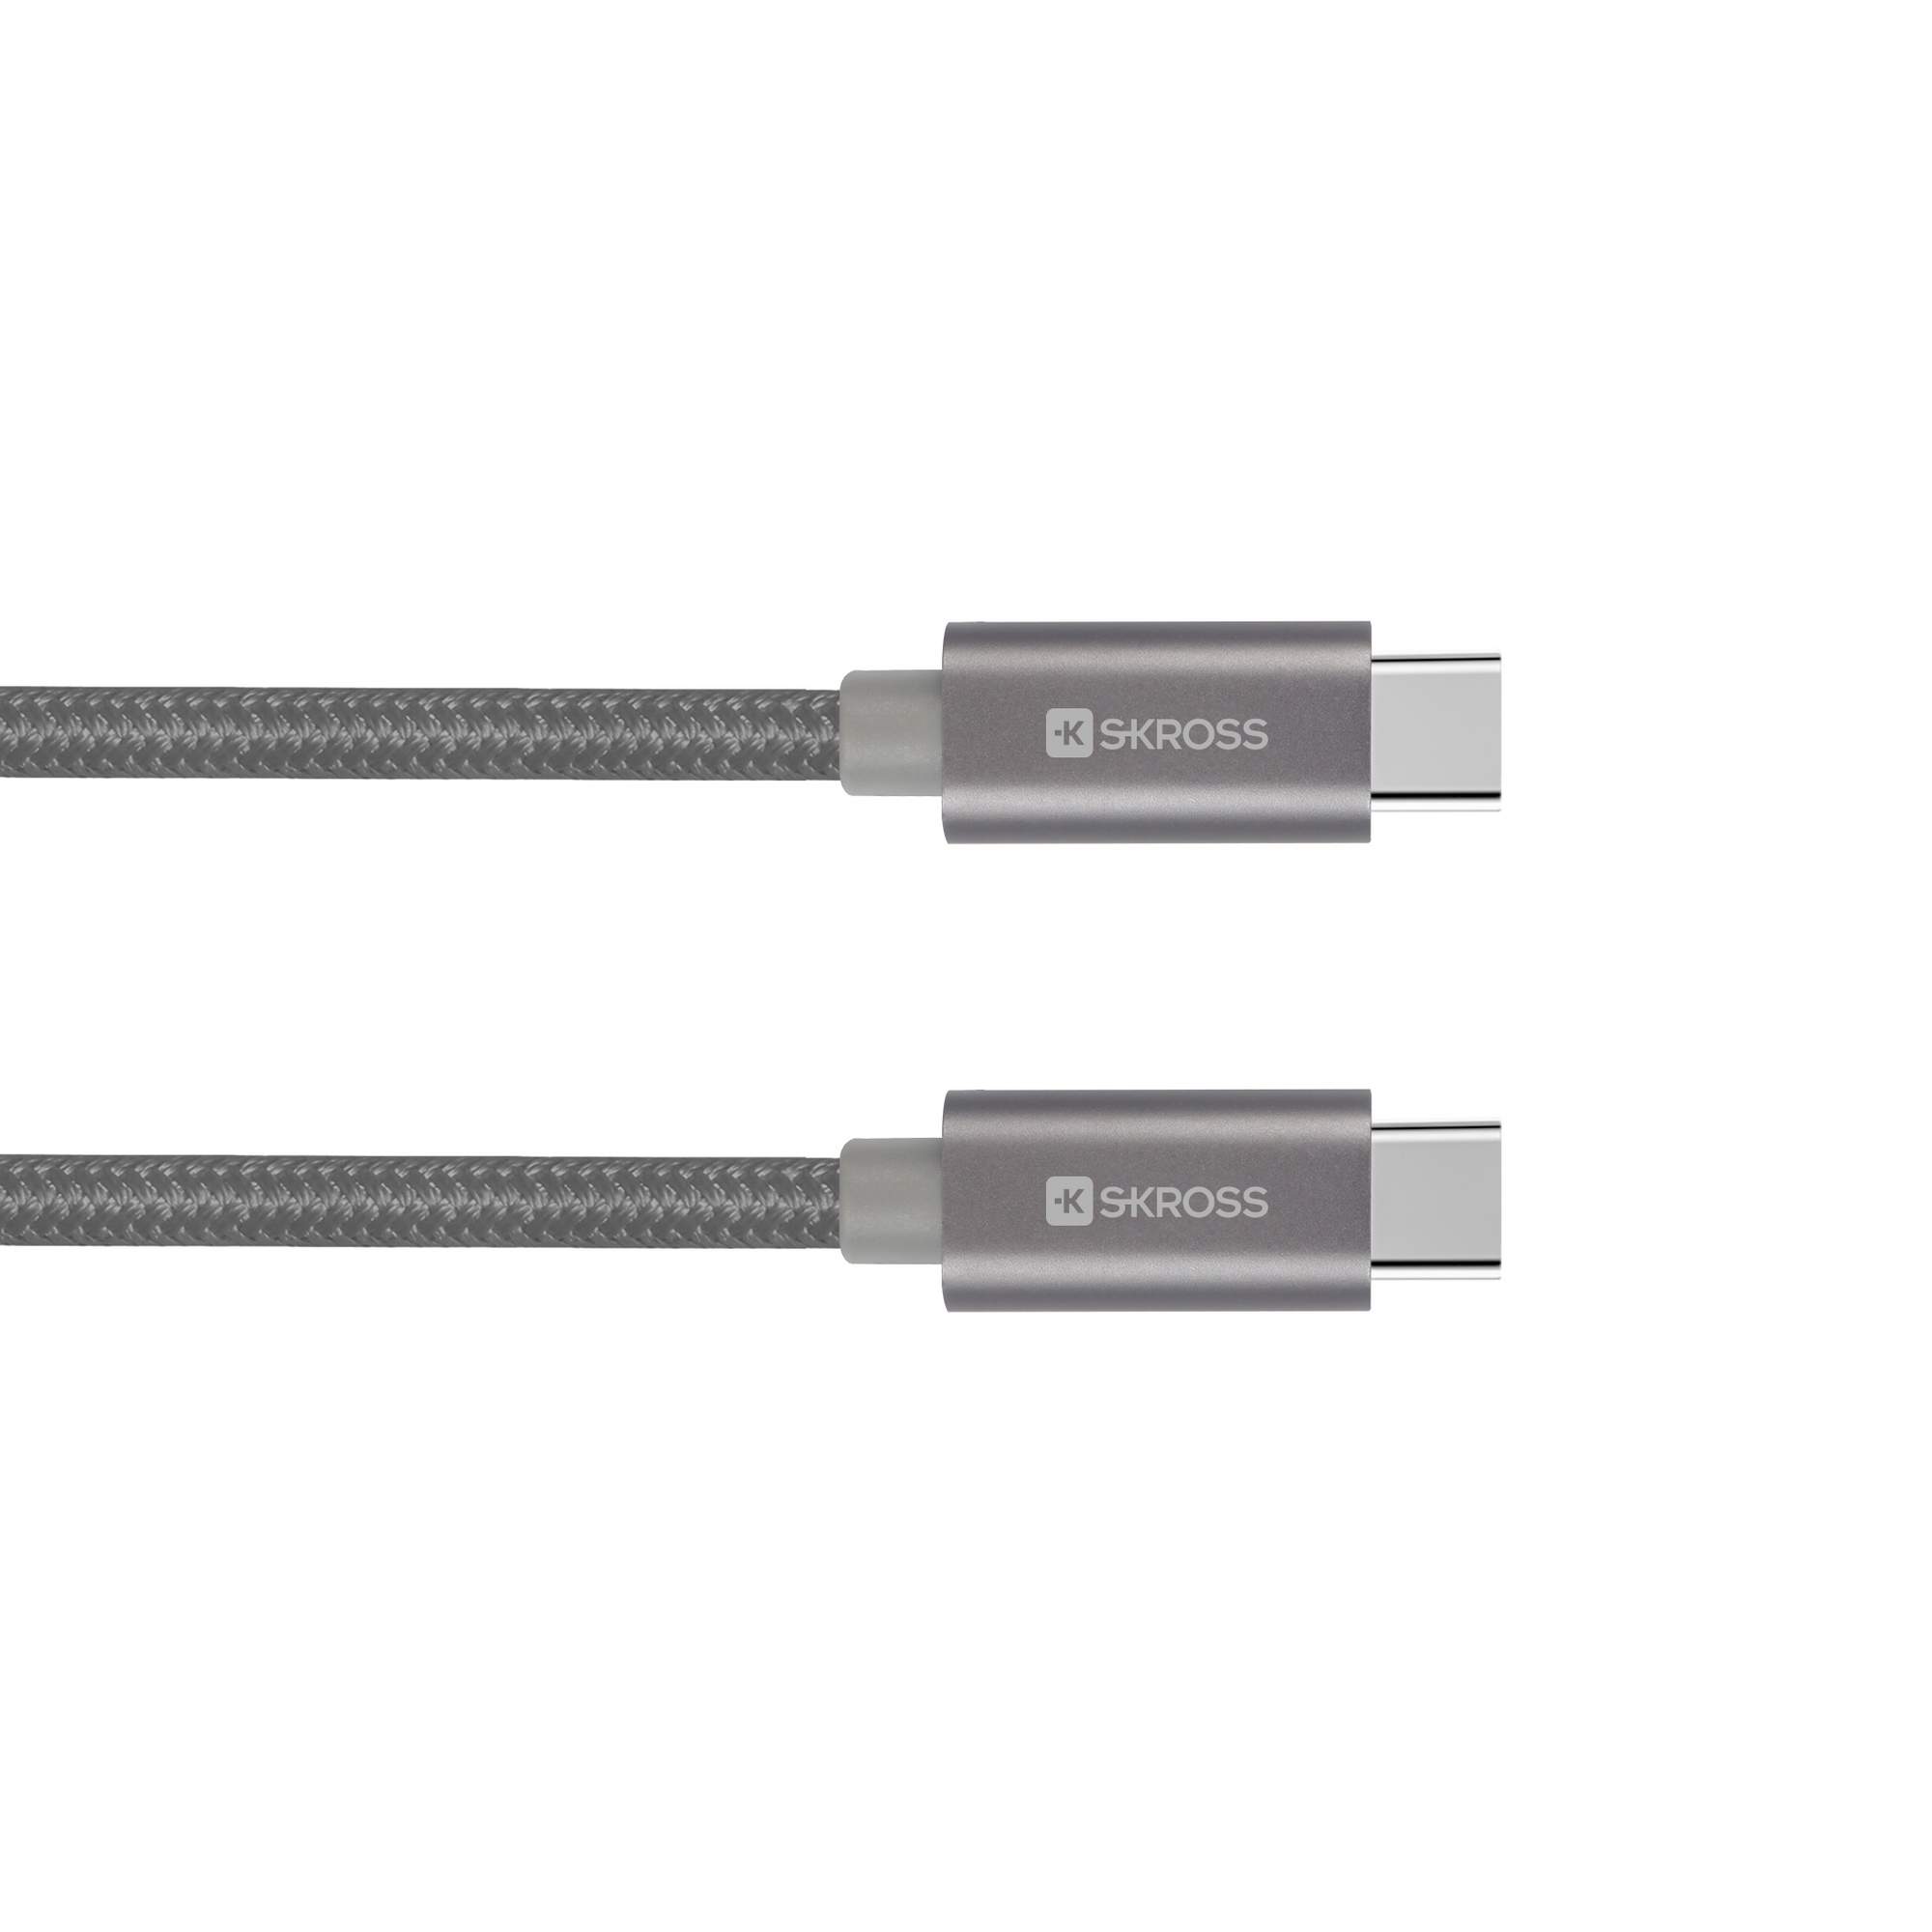 SKROSS USB C TO USB C CABLE - Ladekabel - grau